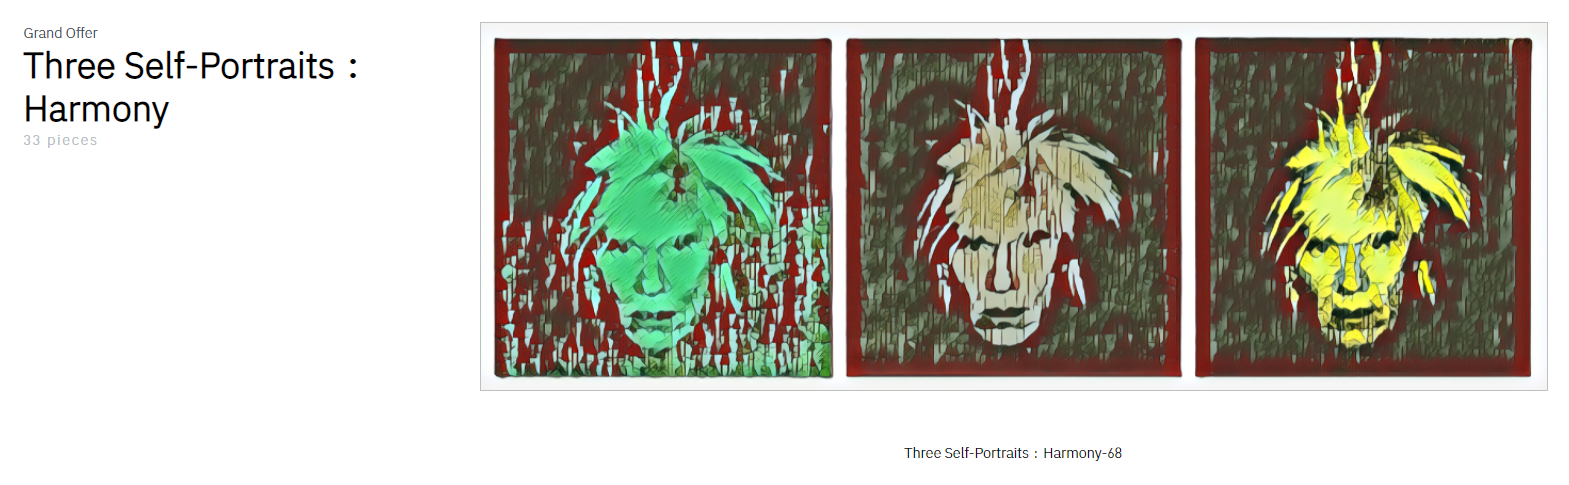 Three Self-Portraits Harmony.PNG